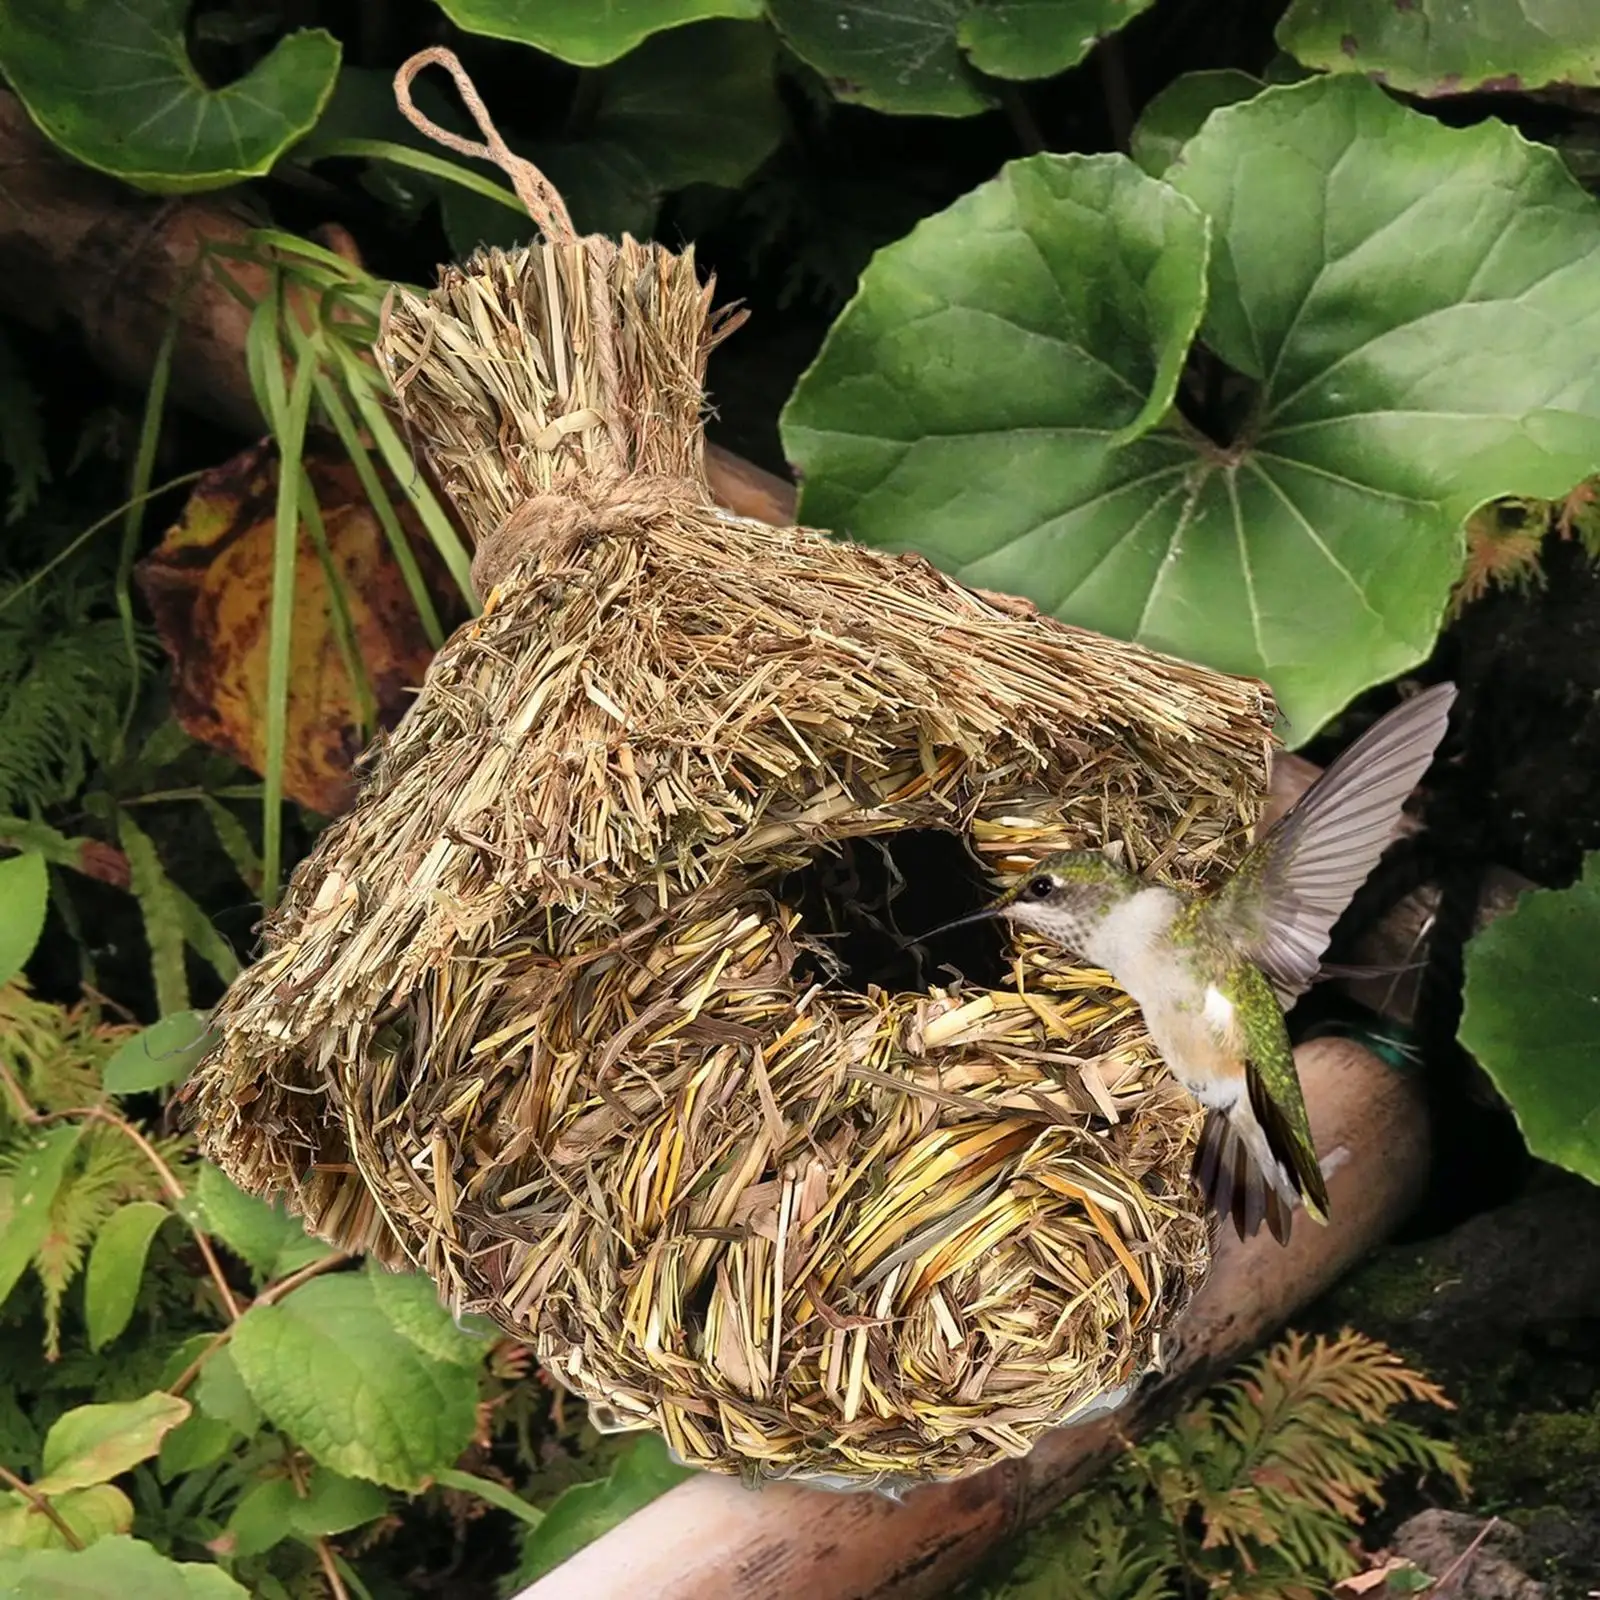 Birdhouse Decoration Roosting Hanging Birds Cage Nest for Lovebird Outdoor